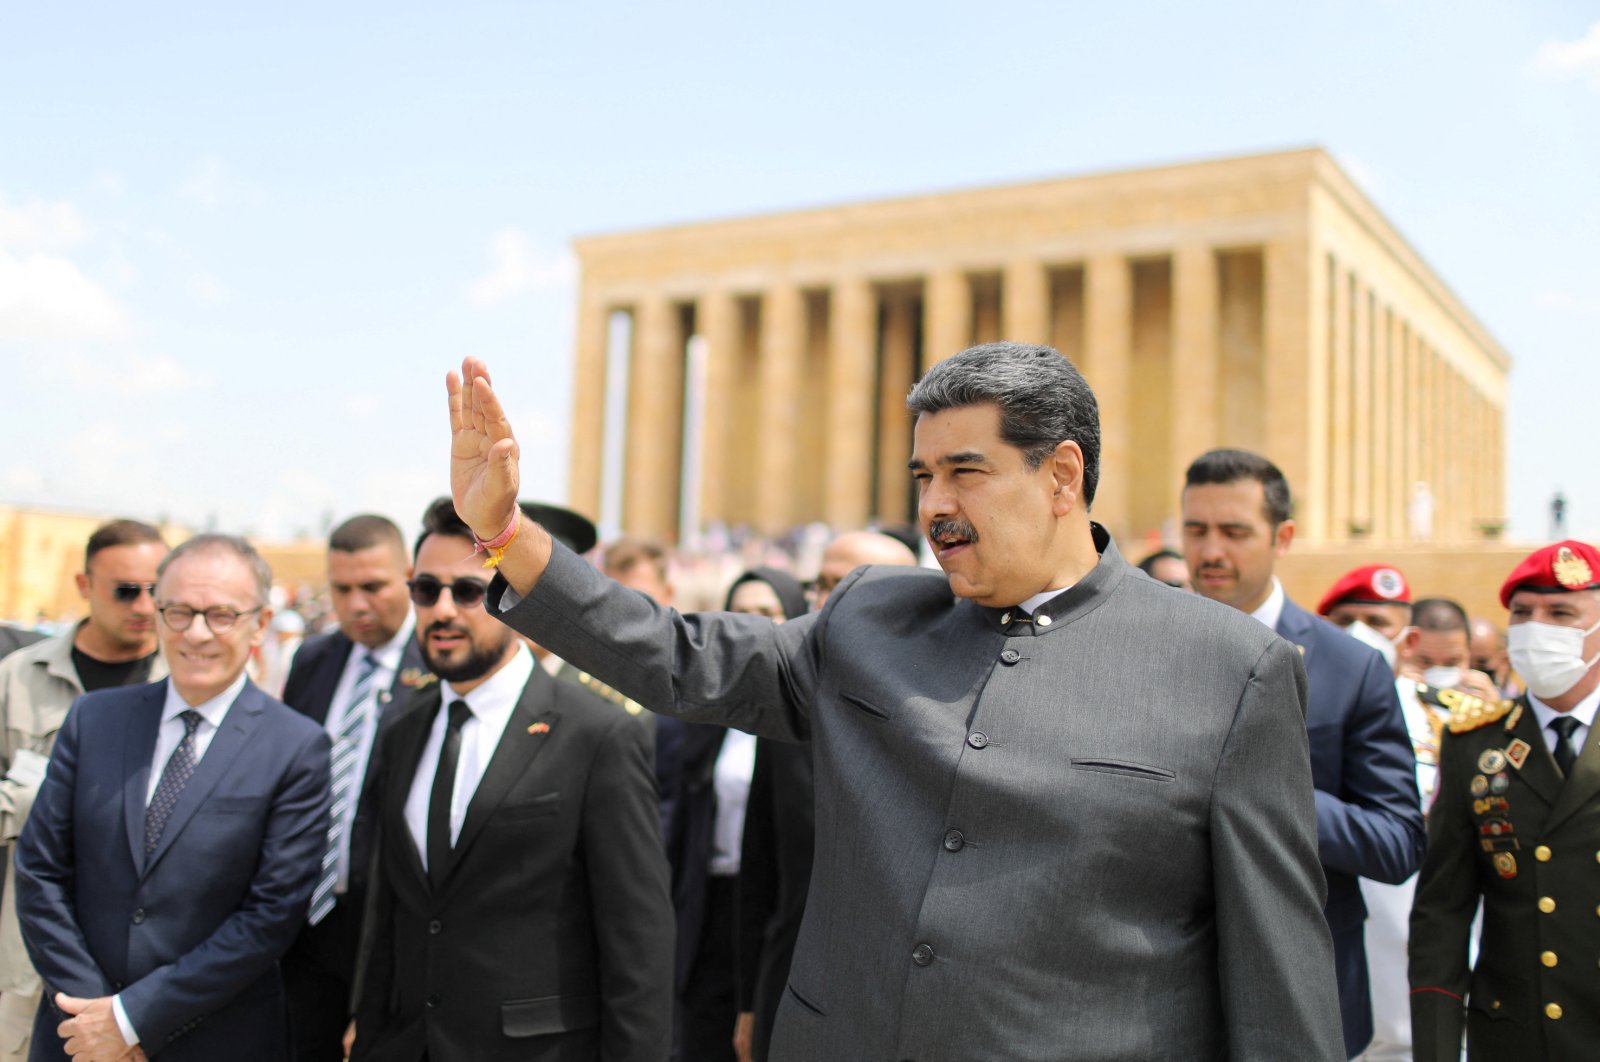 Venezuelan President Nicolas Maduro waves after a visit to Anıtkabir, the mausoleum of Mustafa Kemal Atatürk, founder of modern Turkey, as part of a two-day official visit, in Ankara, Turkey, June 8, 2022. (Reuters)